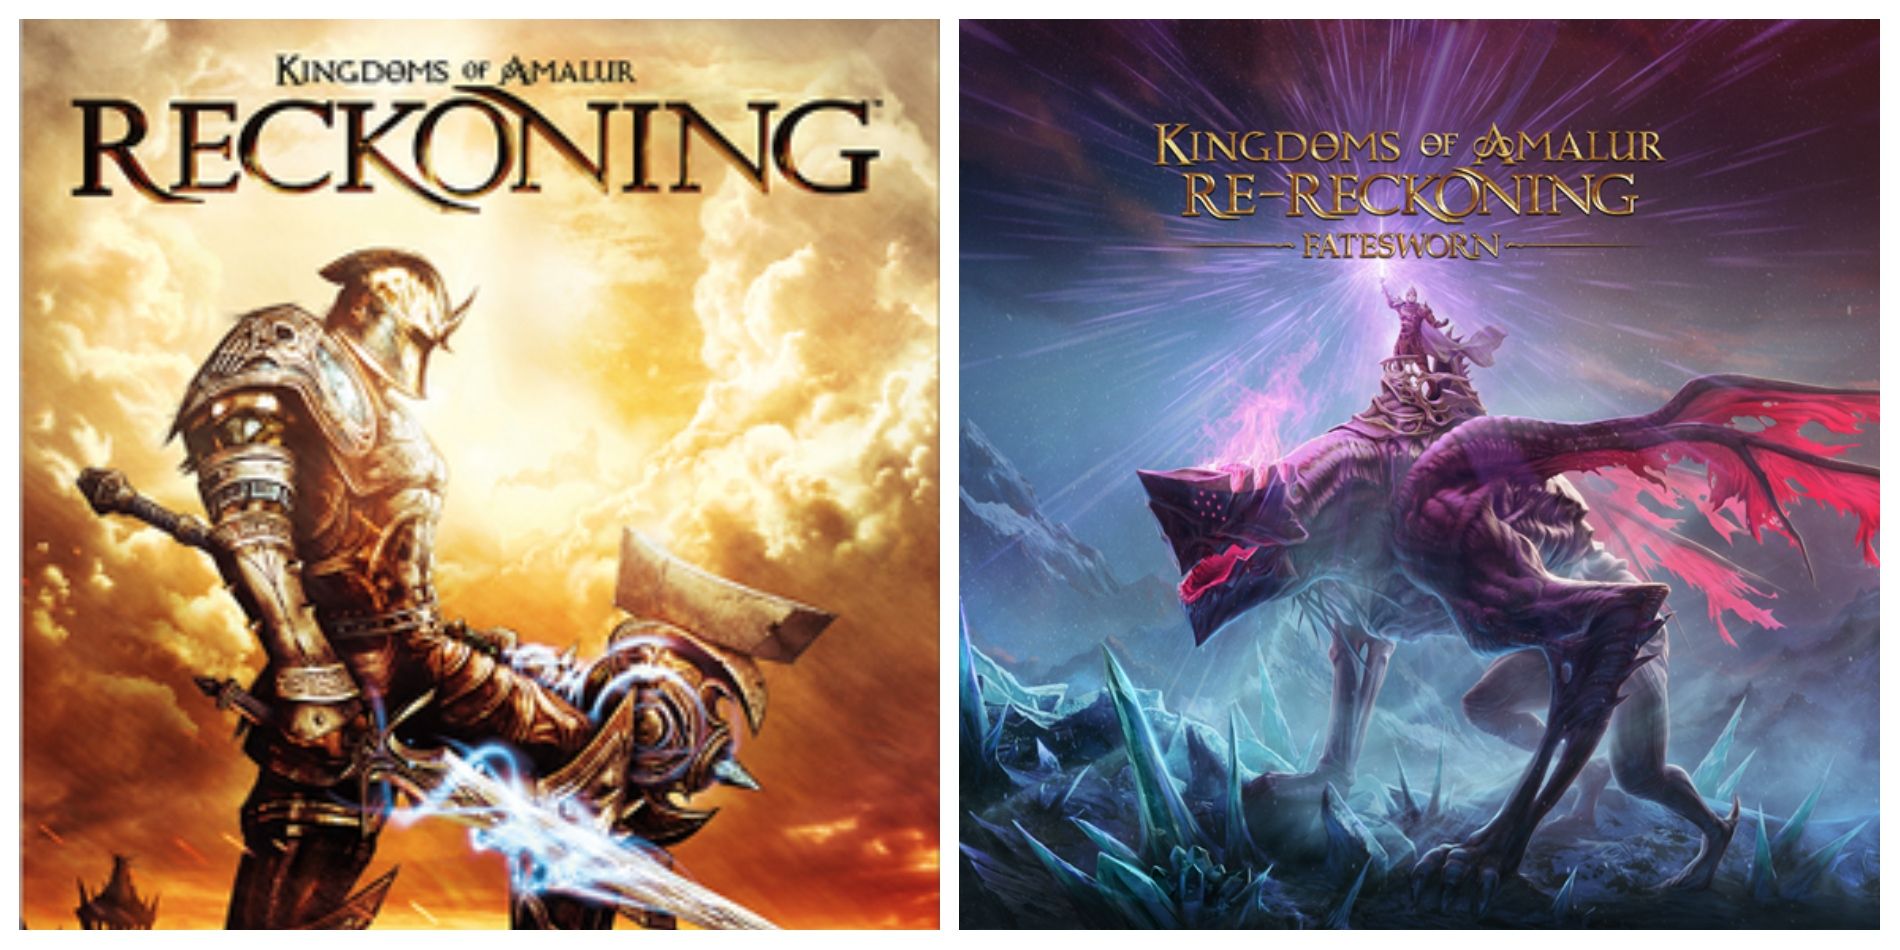 Kingdoms Of Amalur ReReckonings Fatesworn DLC Could Hint At Sequel